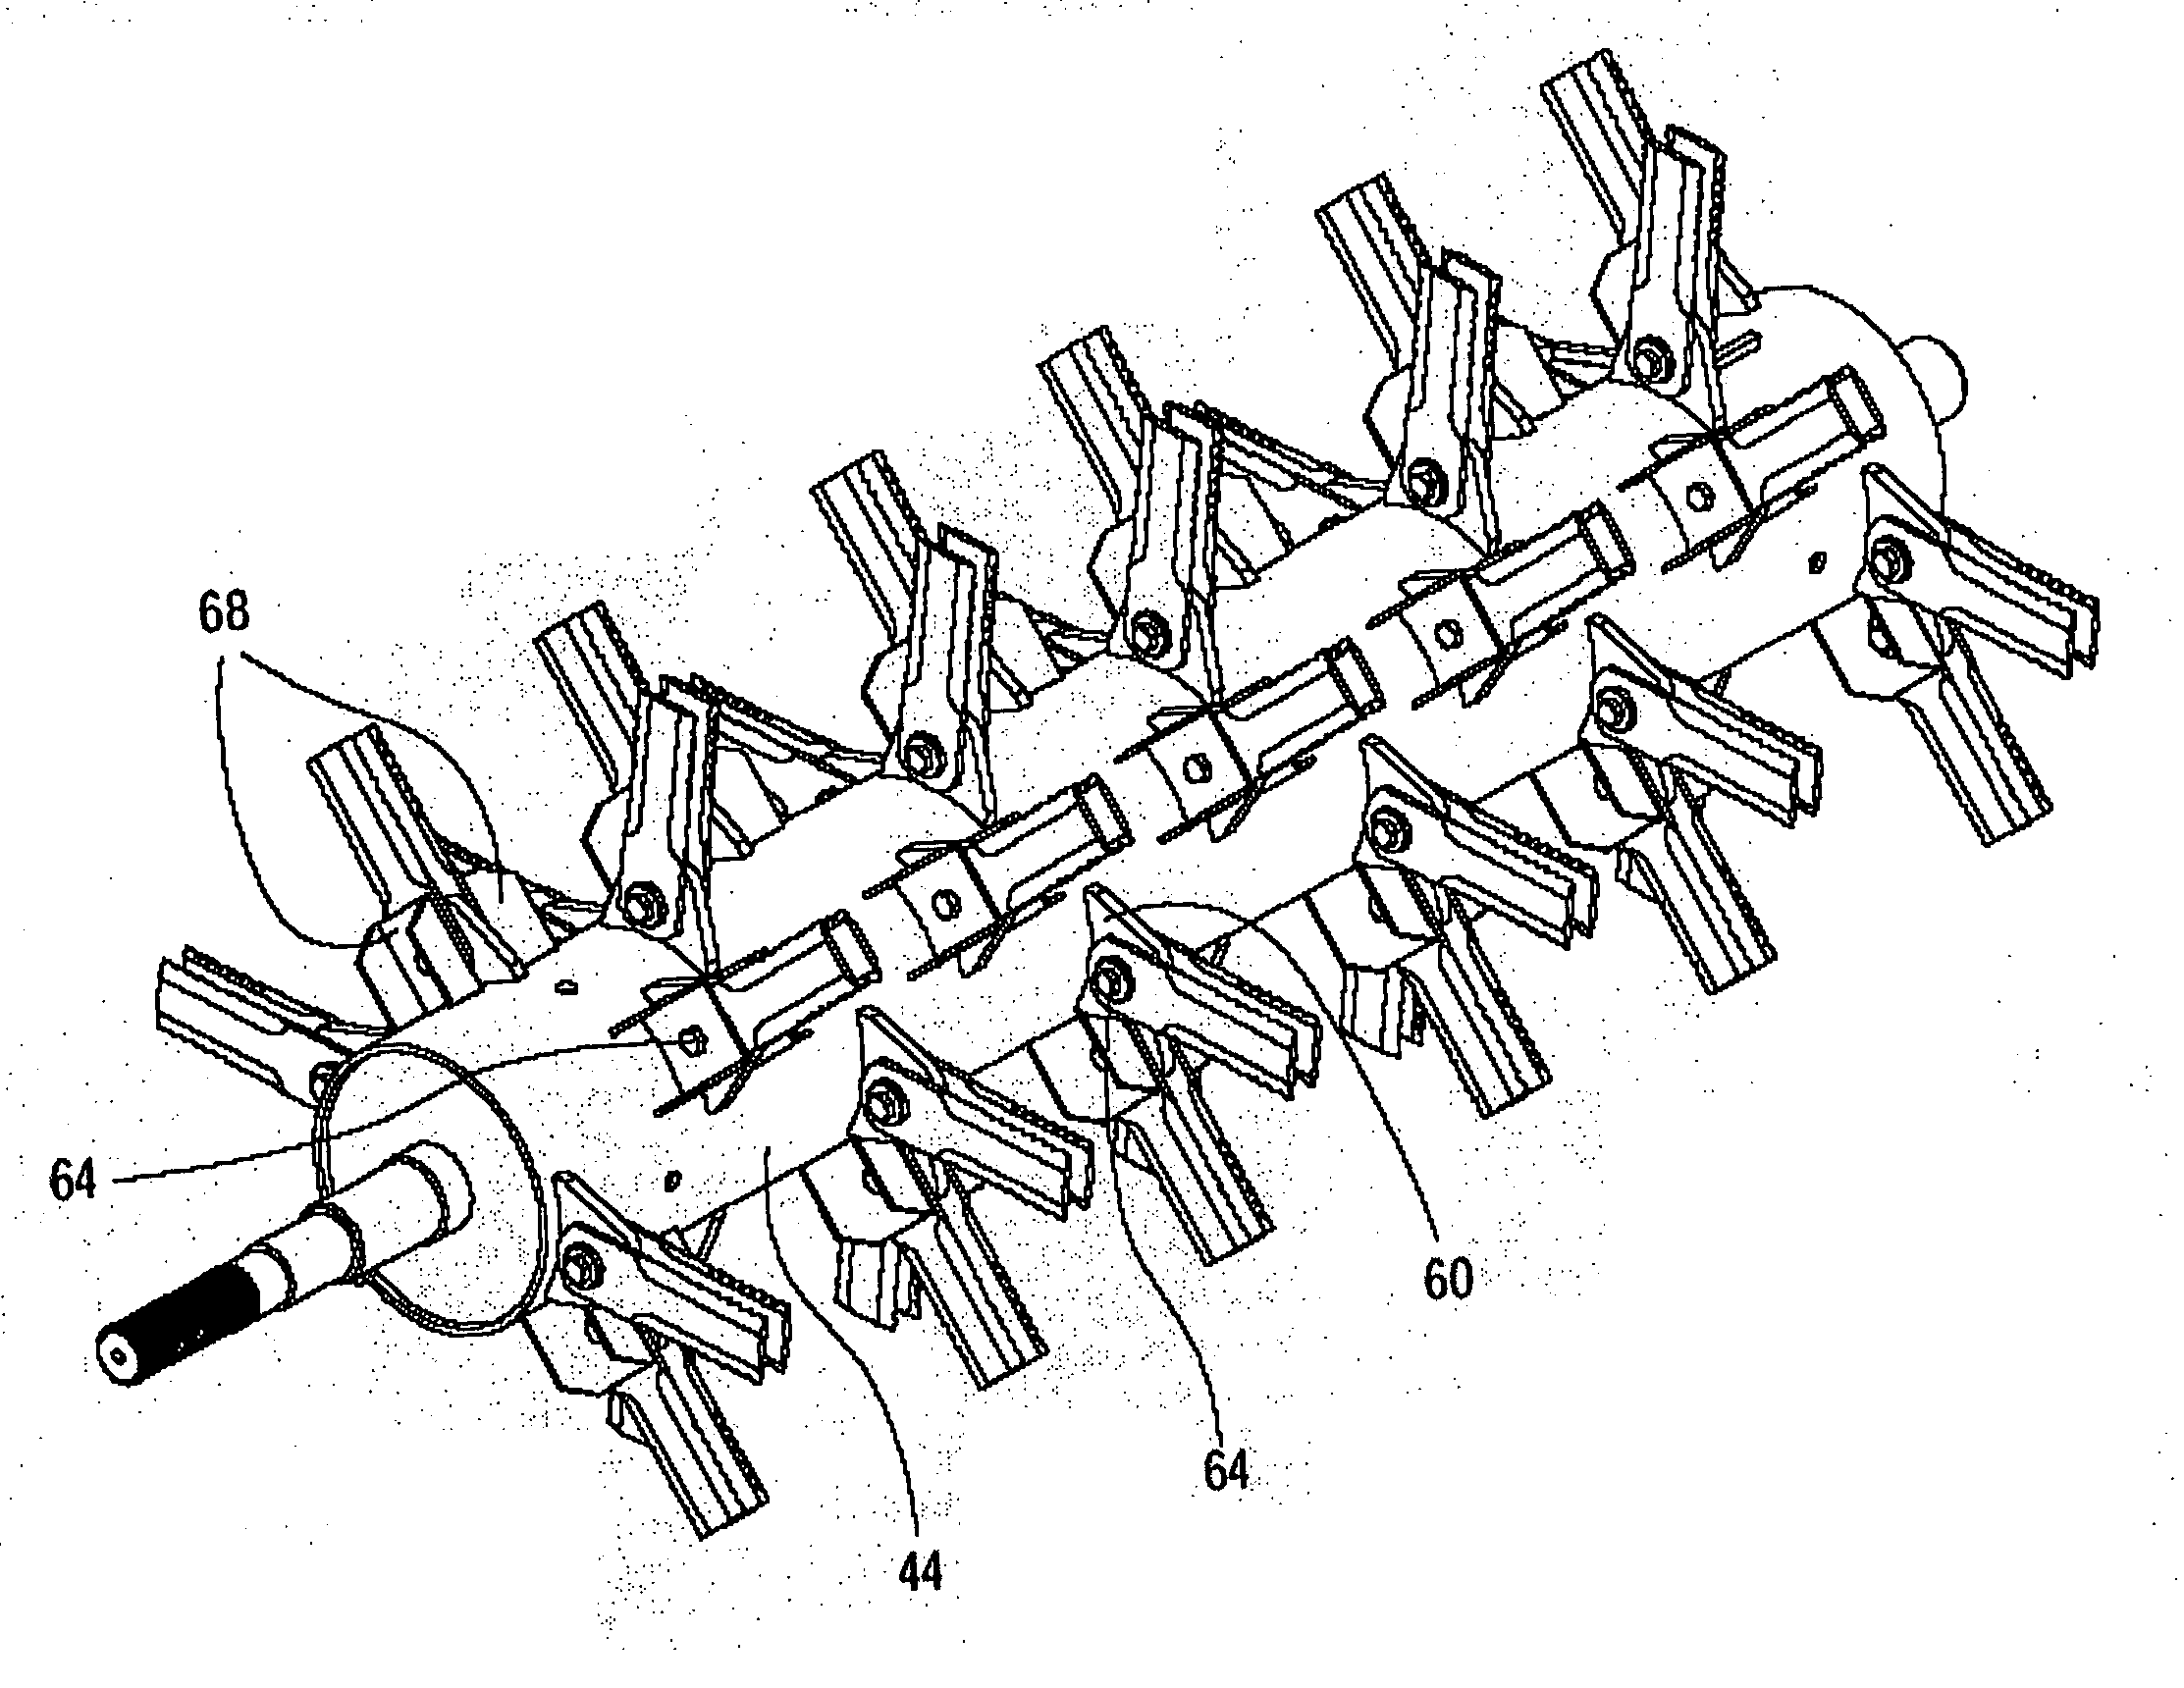 Rotor for a straw chopper